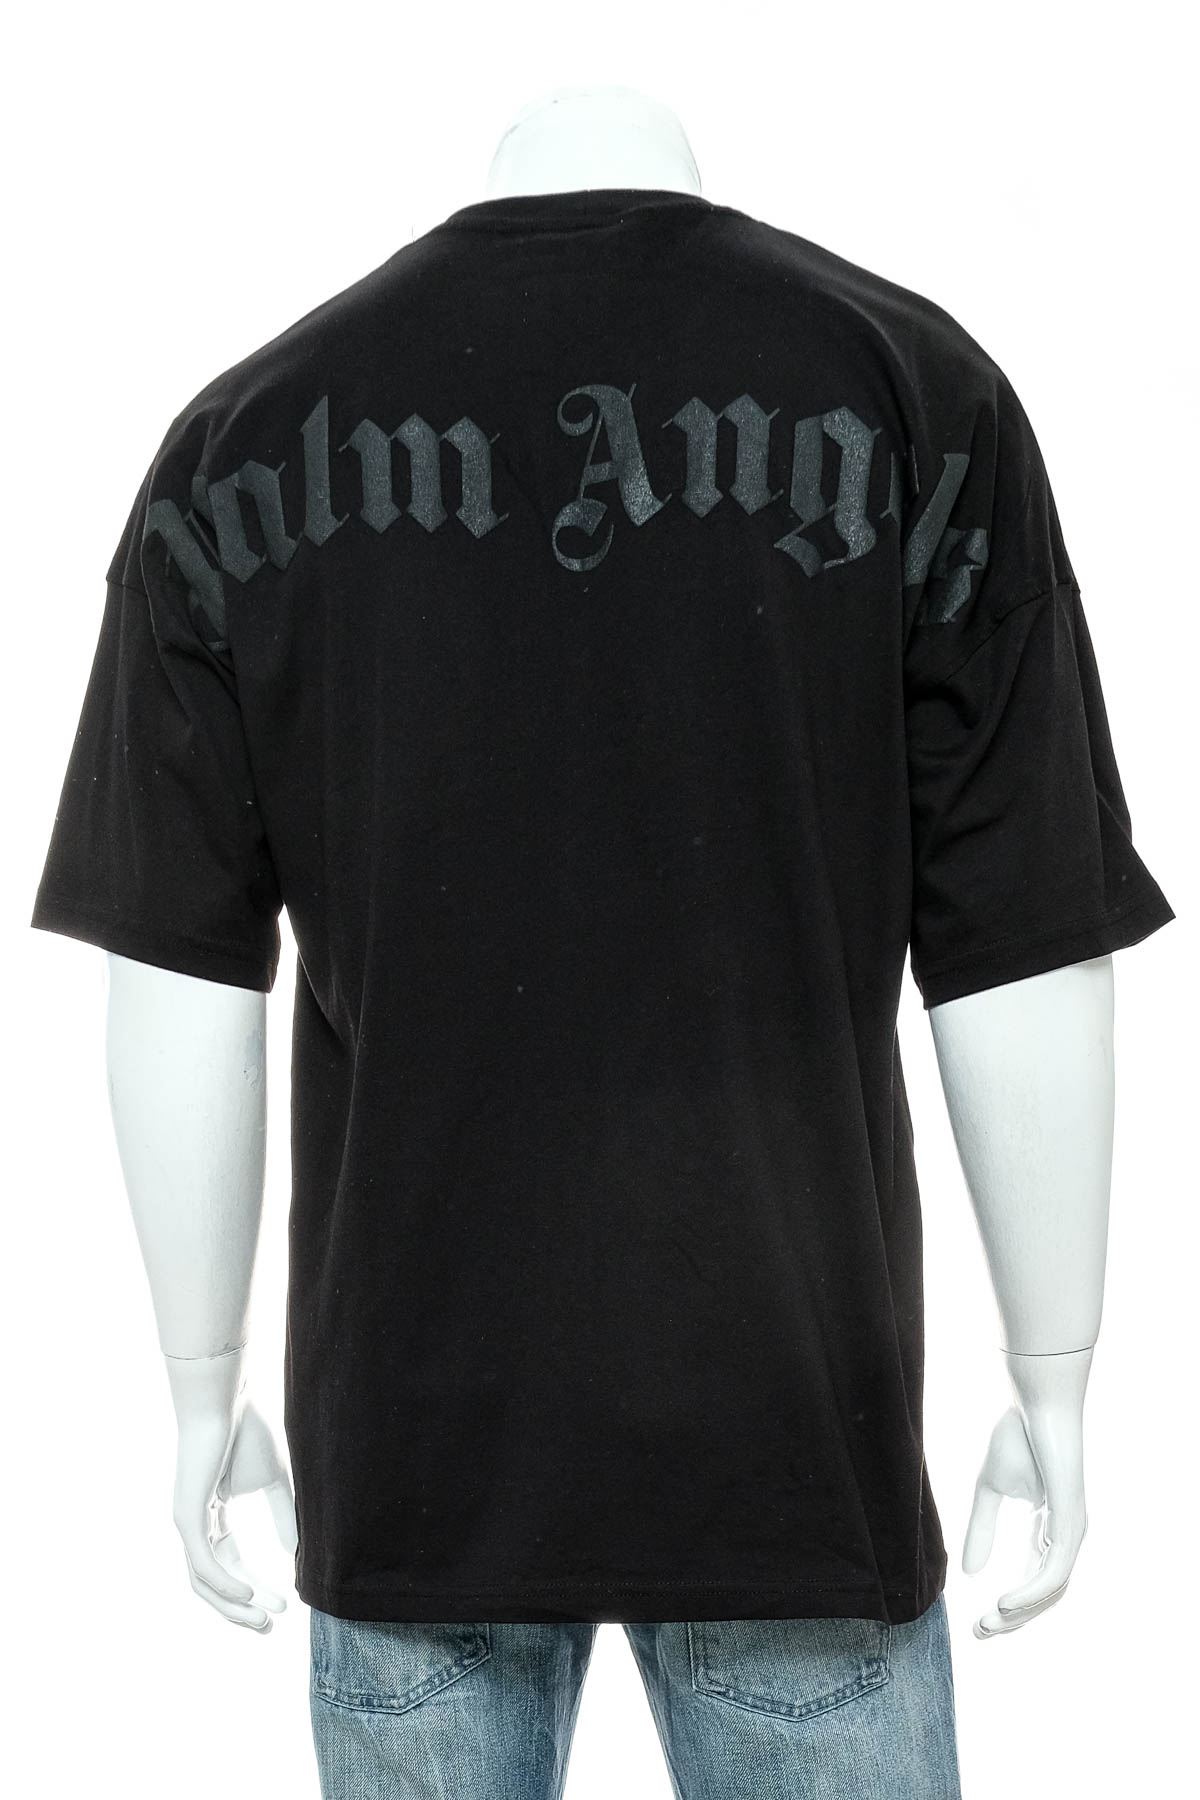 Men's T-shirt - Palm Angels - 1